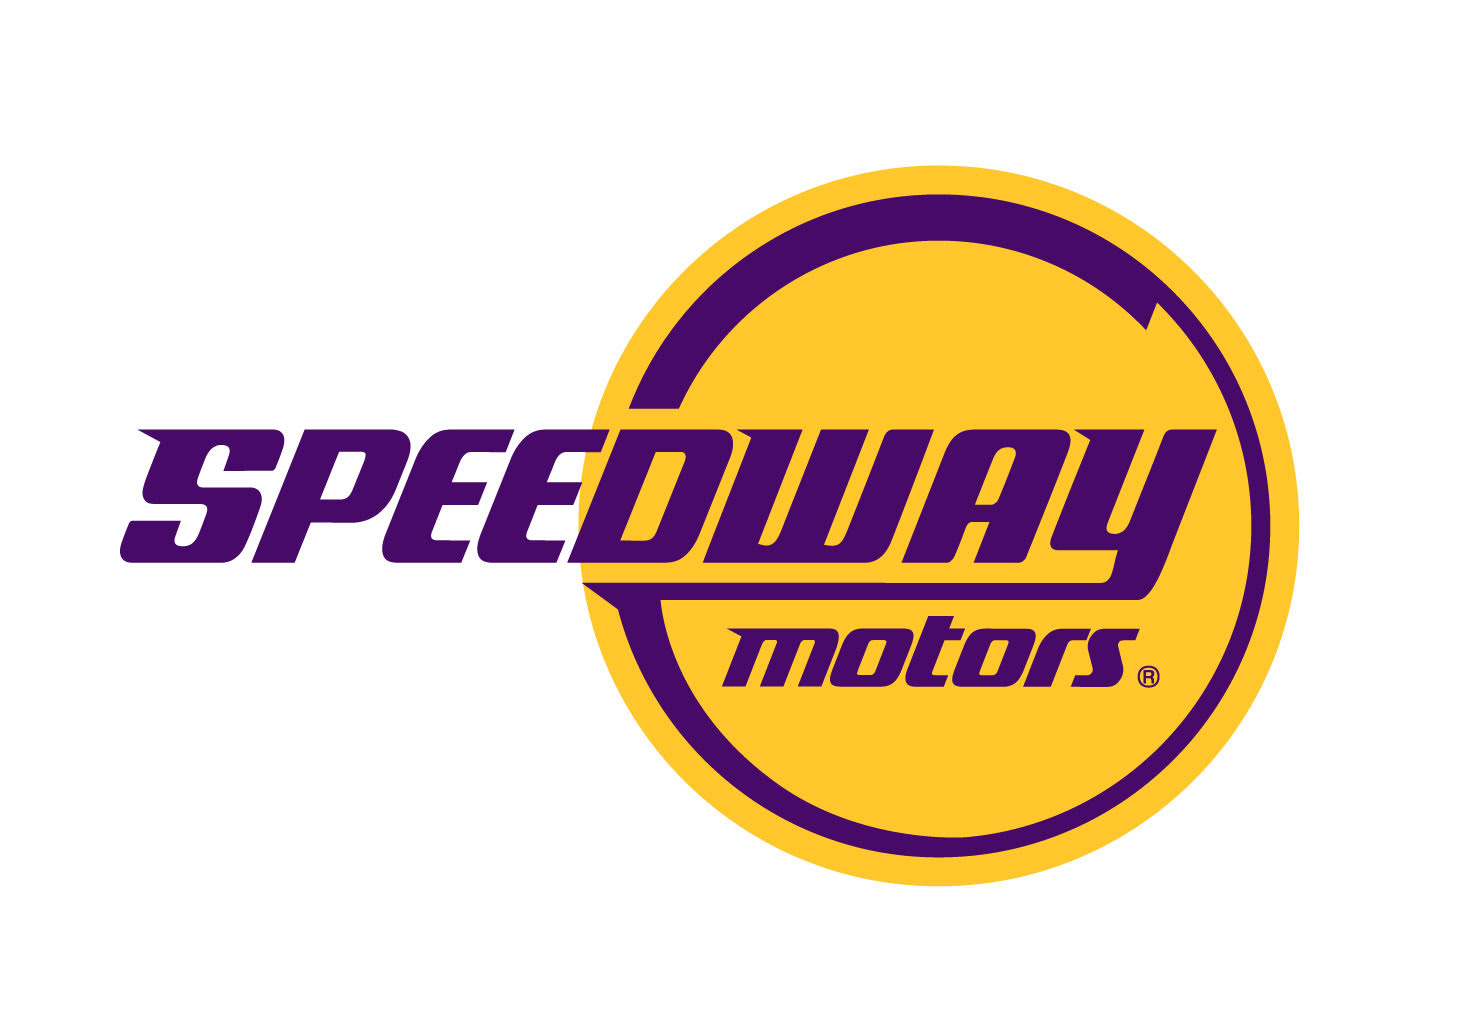 Speedway Motors marks new milestones in 2020 IMCA sponsorship season